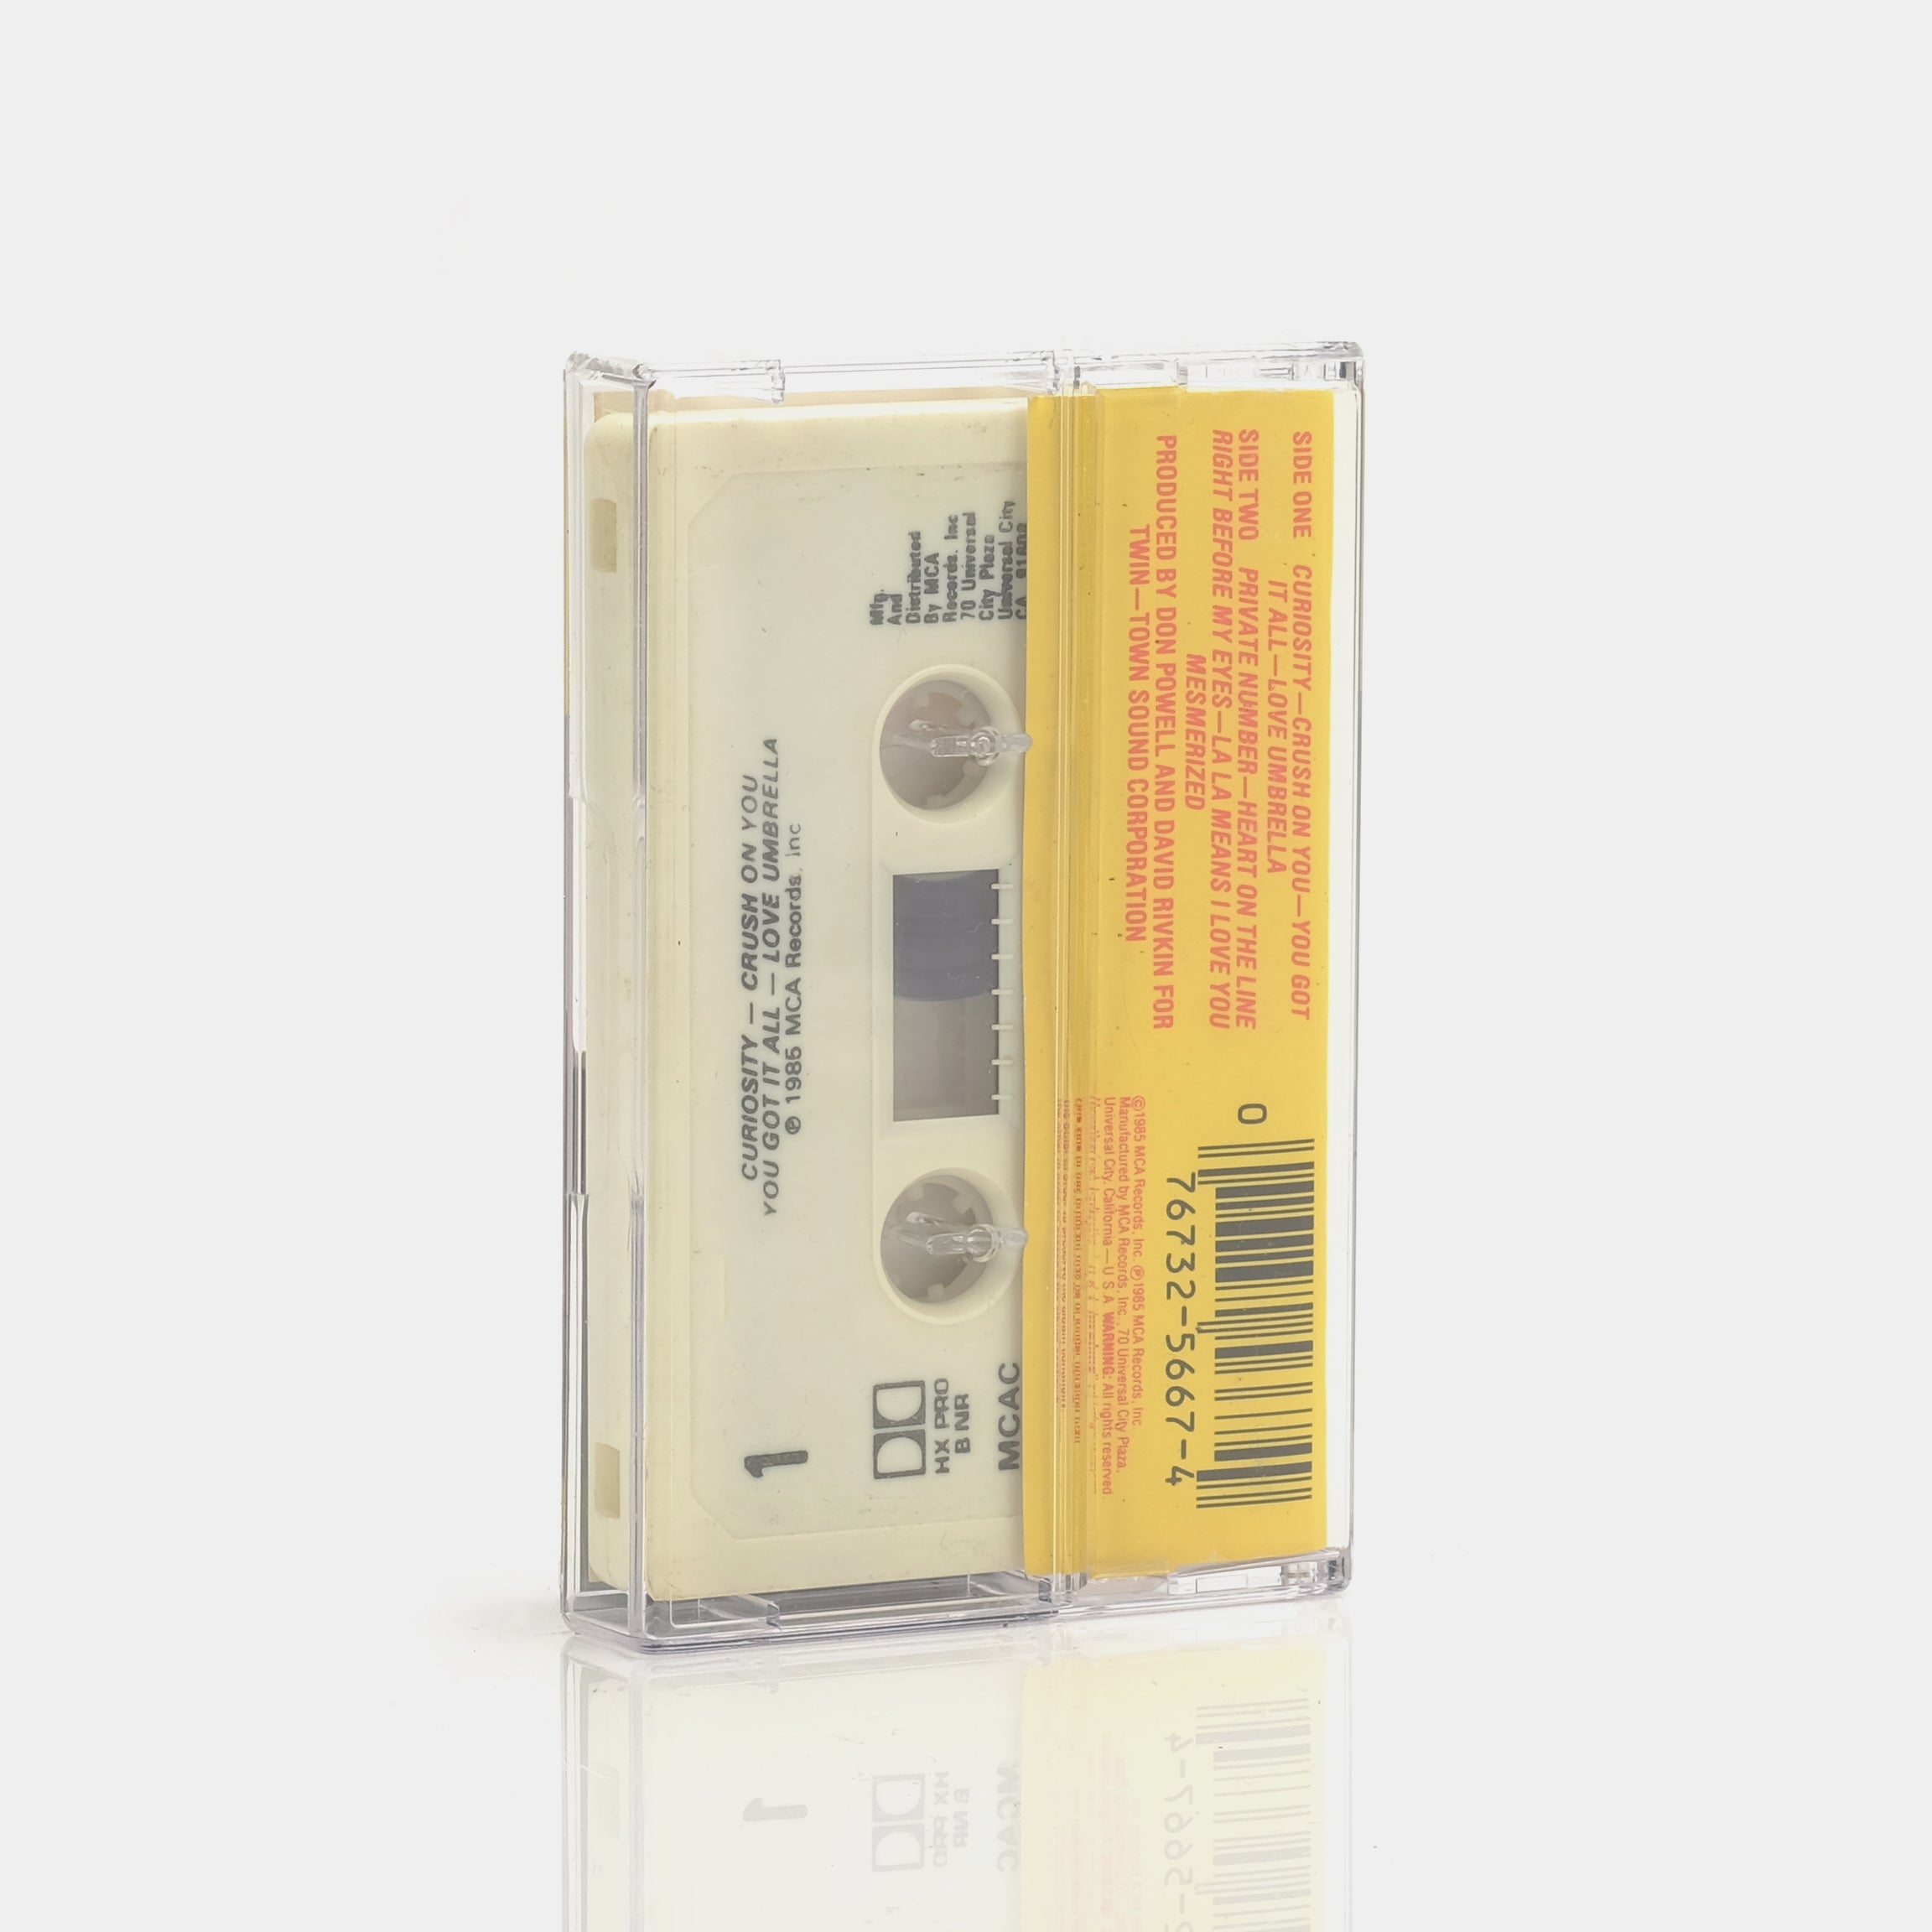 The Jets - The Jets Cassette Tape